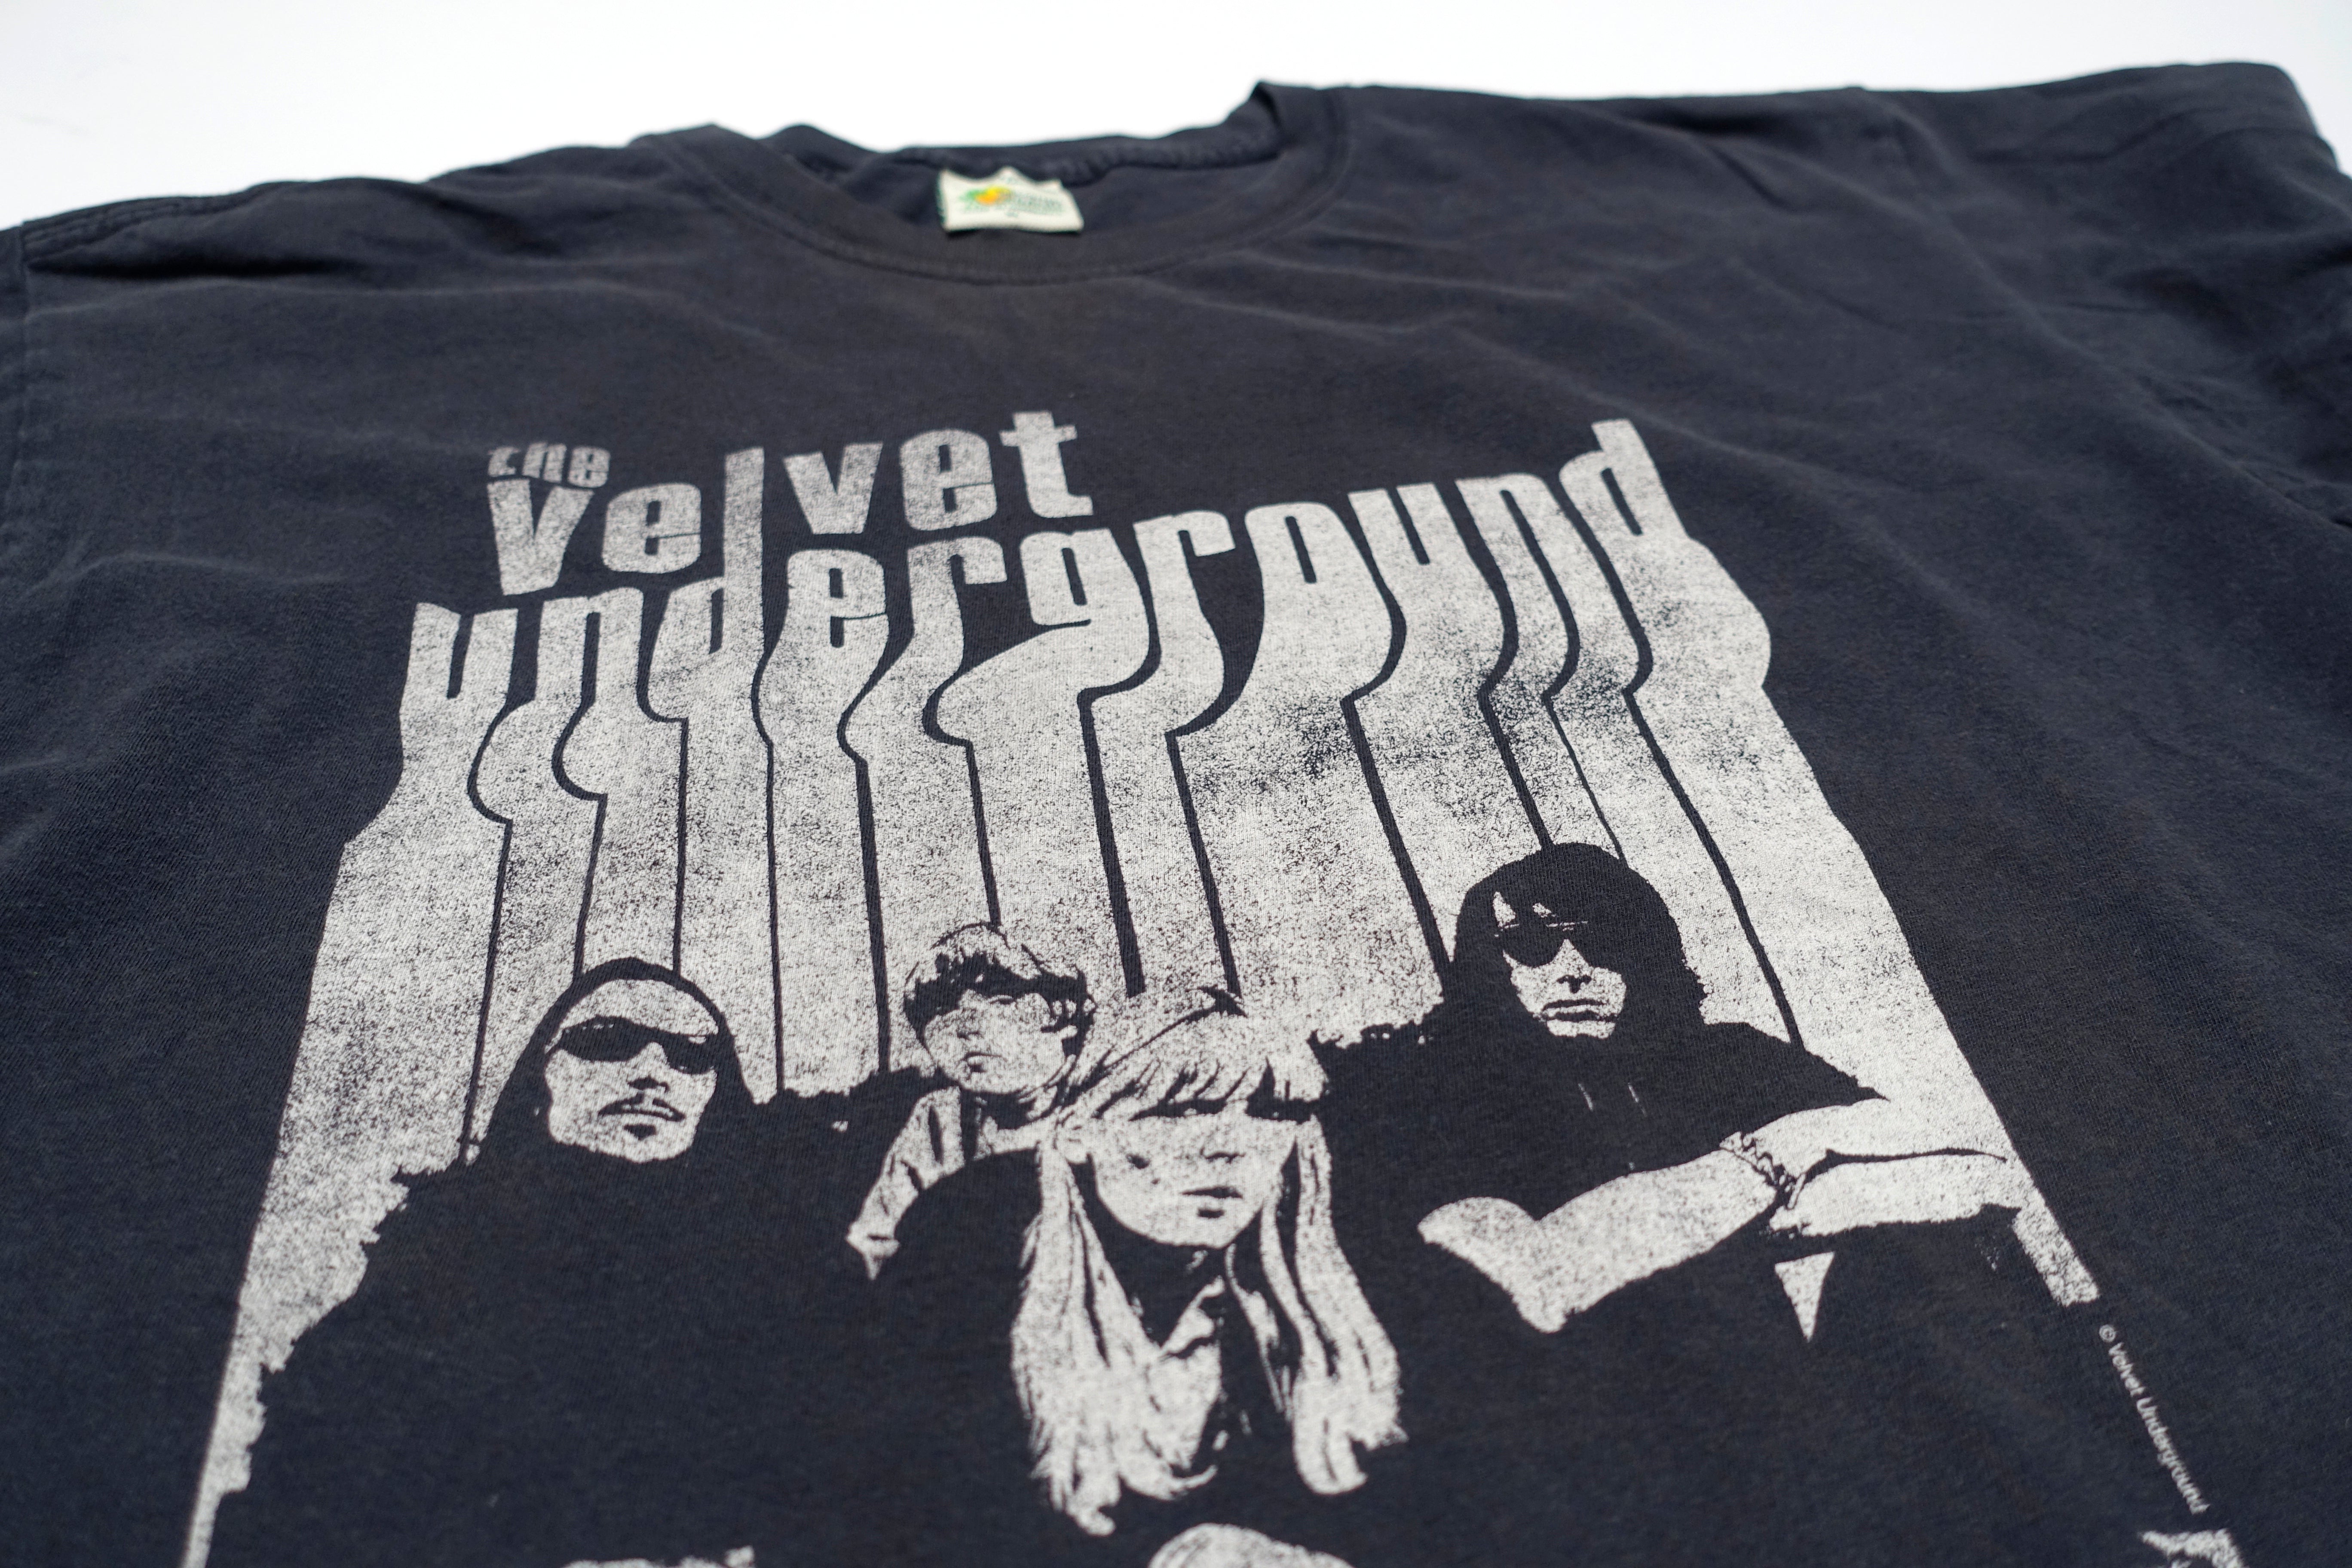 Velvet Underground – Band Photo 00's Shirt Size XL (Not Vintage, but Soft)